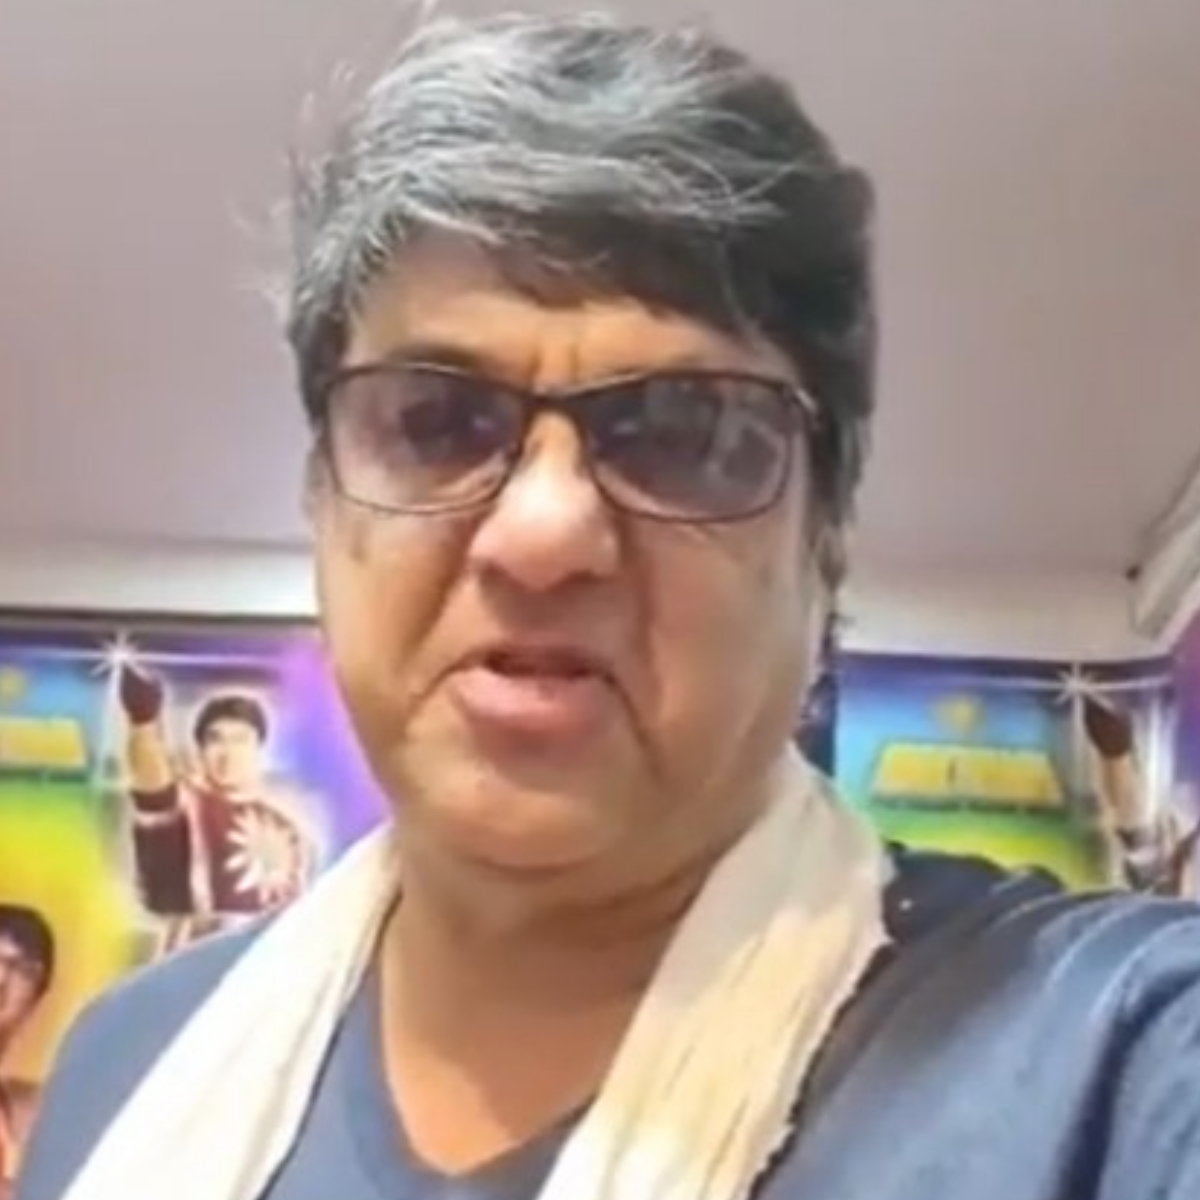 Shaktimaan Video Sex - Shaktimaan fame Mukesh Khanna says women who desire sex are 'indecent';  Calls them 'sex workers' | PINKVILLA